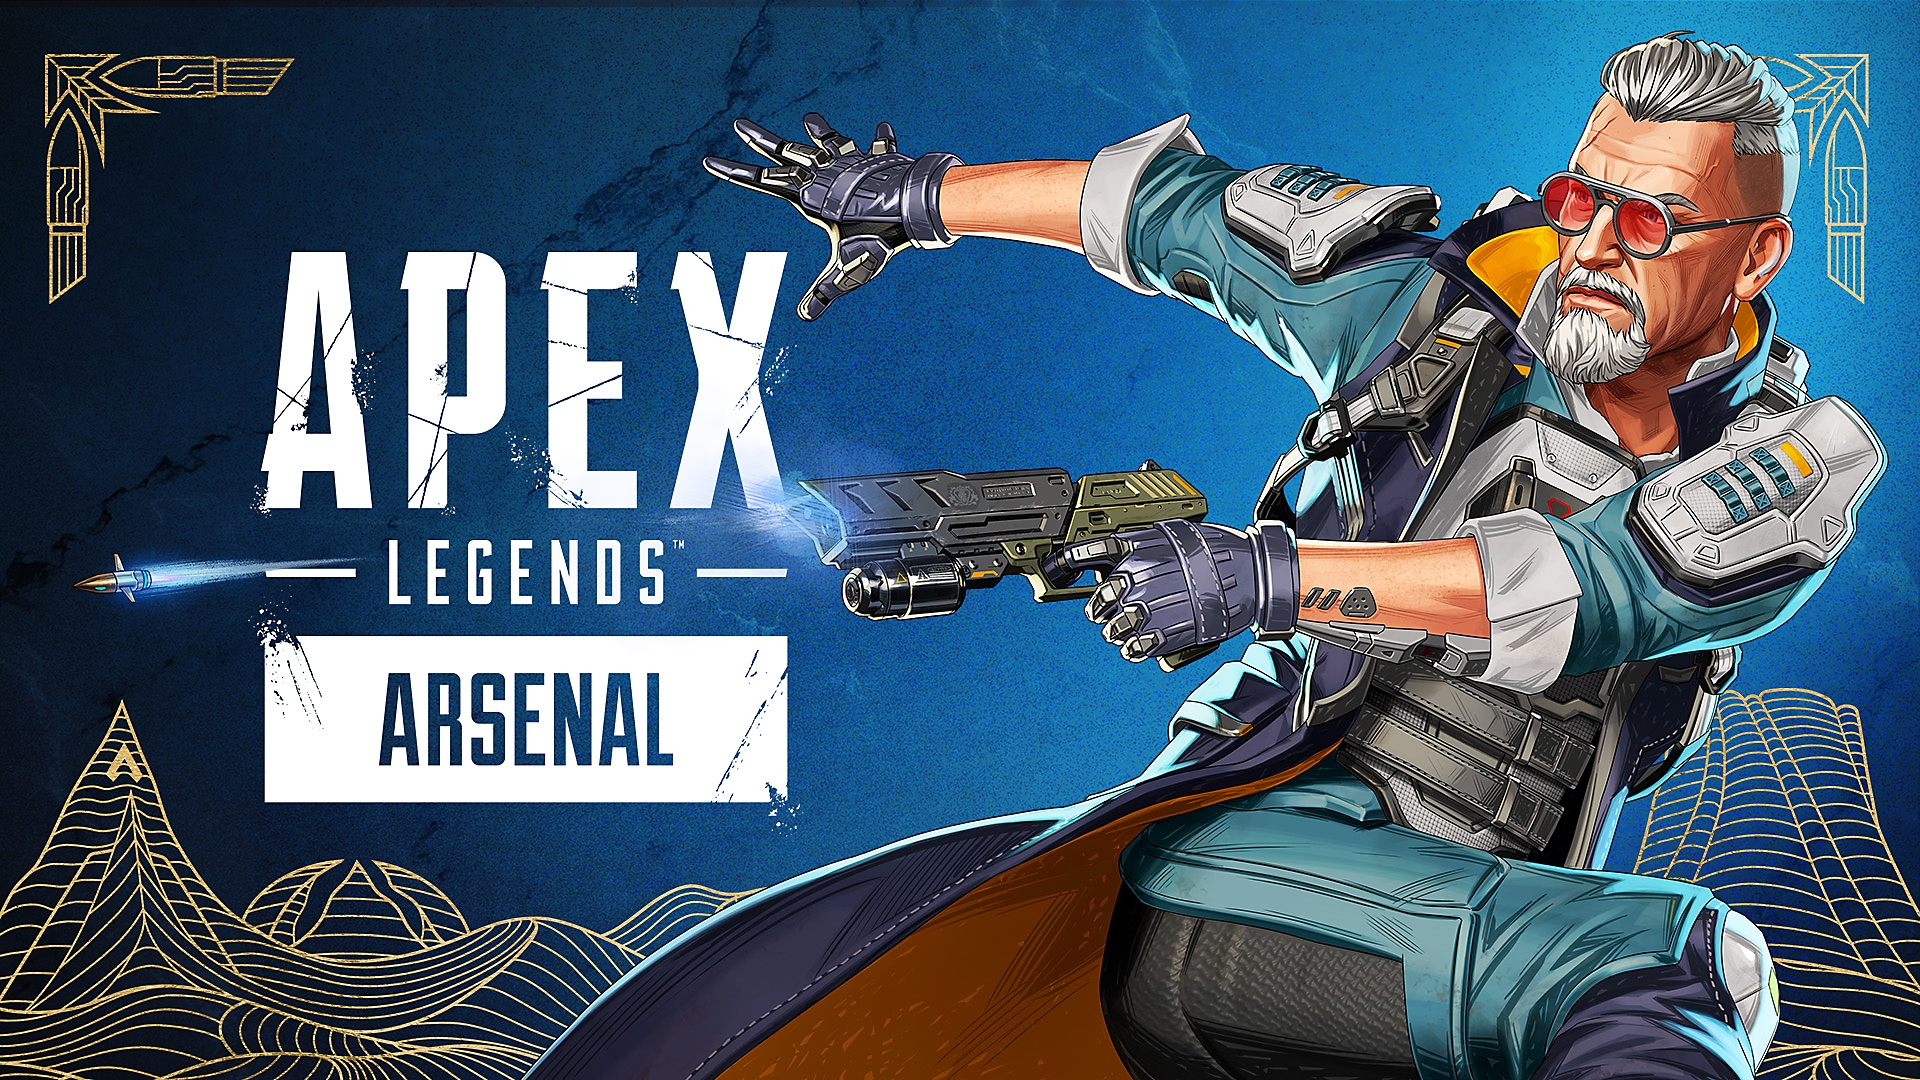 Apex Legends - Revelry Launch Trailer | PS5 & PS4 Games